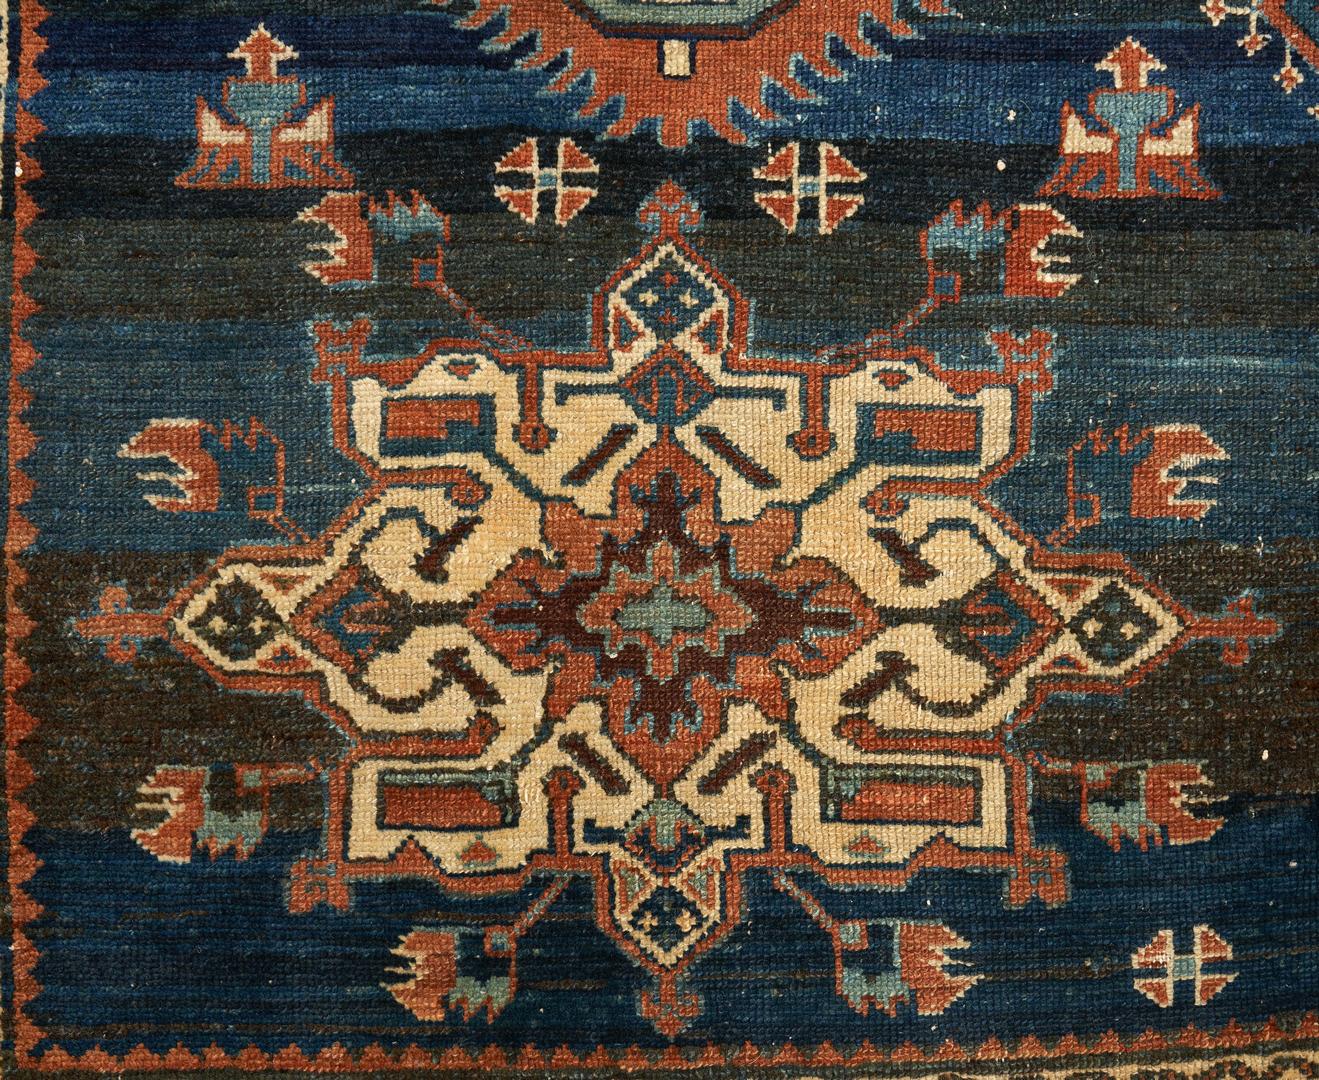 Lot 534: Persian Caucasian Carpet, 10 x 5 ft